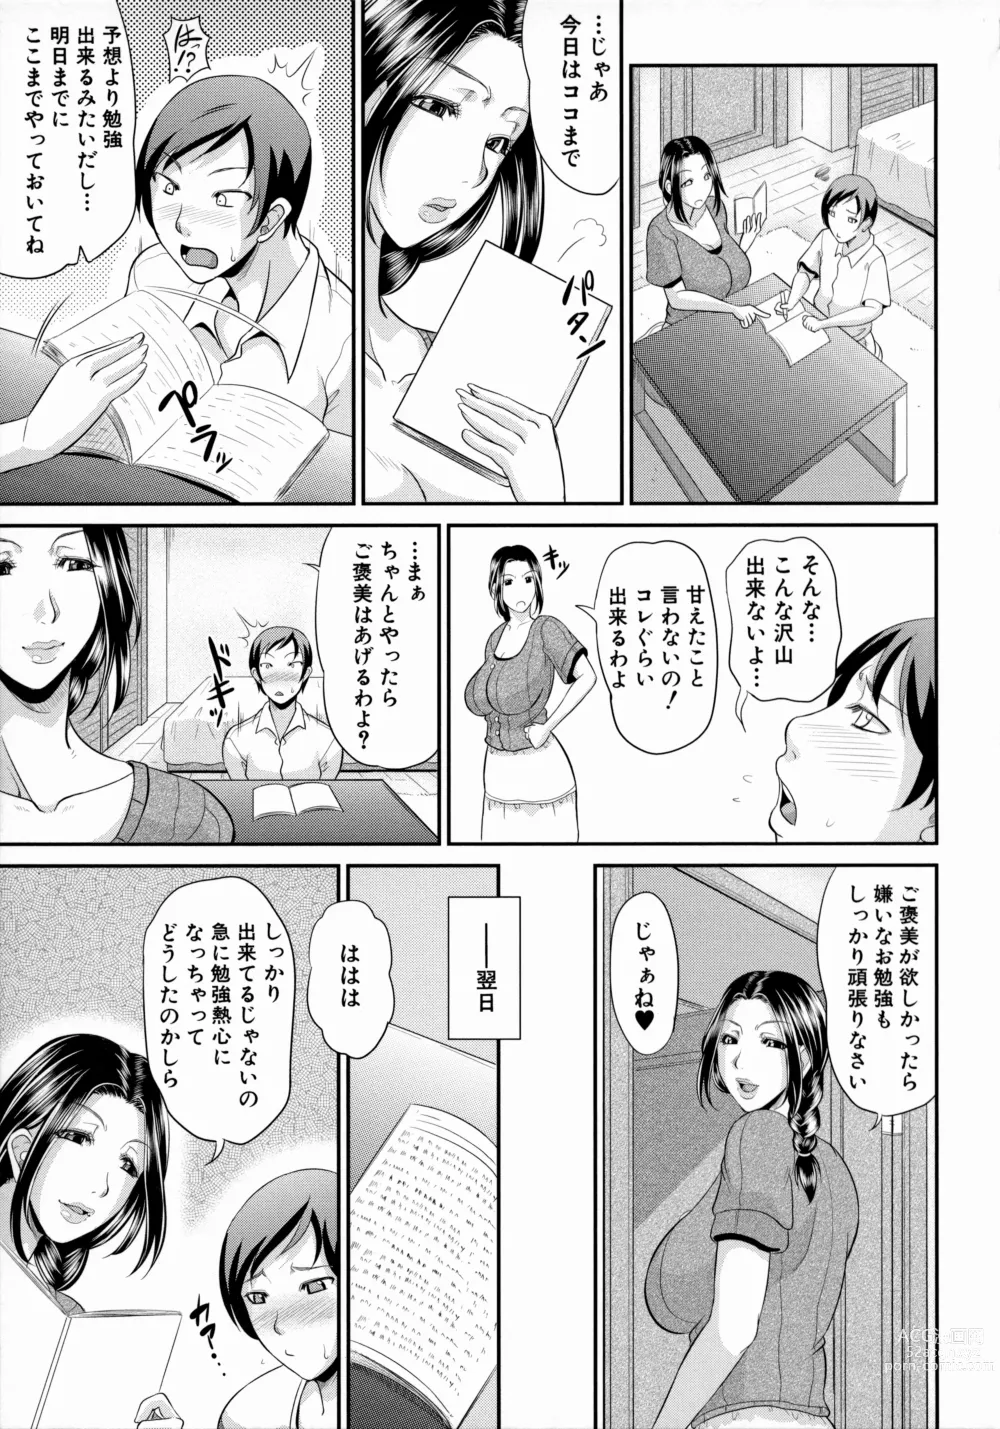 Page 183 of manga Uruwashi no Wife